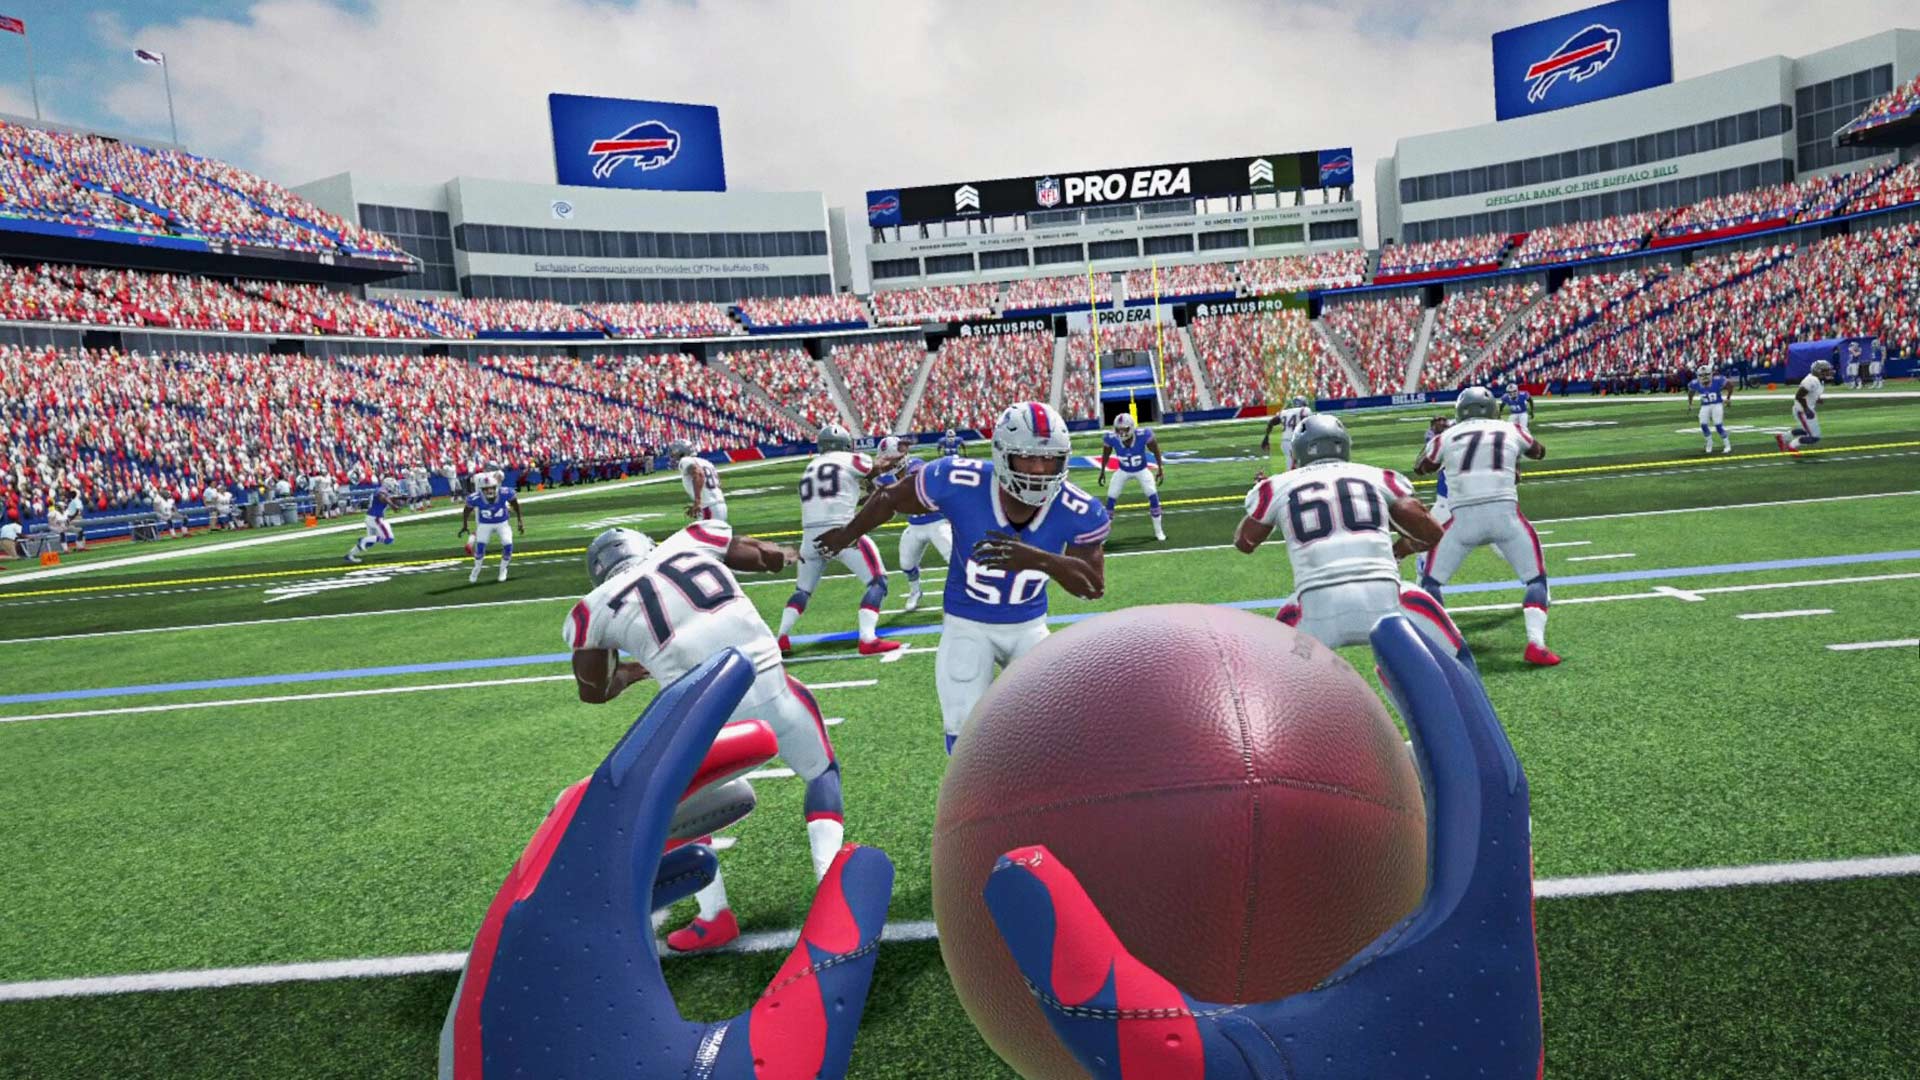 NFL Pro Era Studio Raises $20M From Google to Grow VR Sports Genre